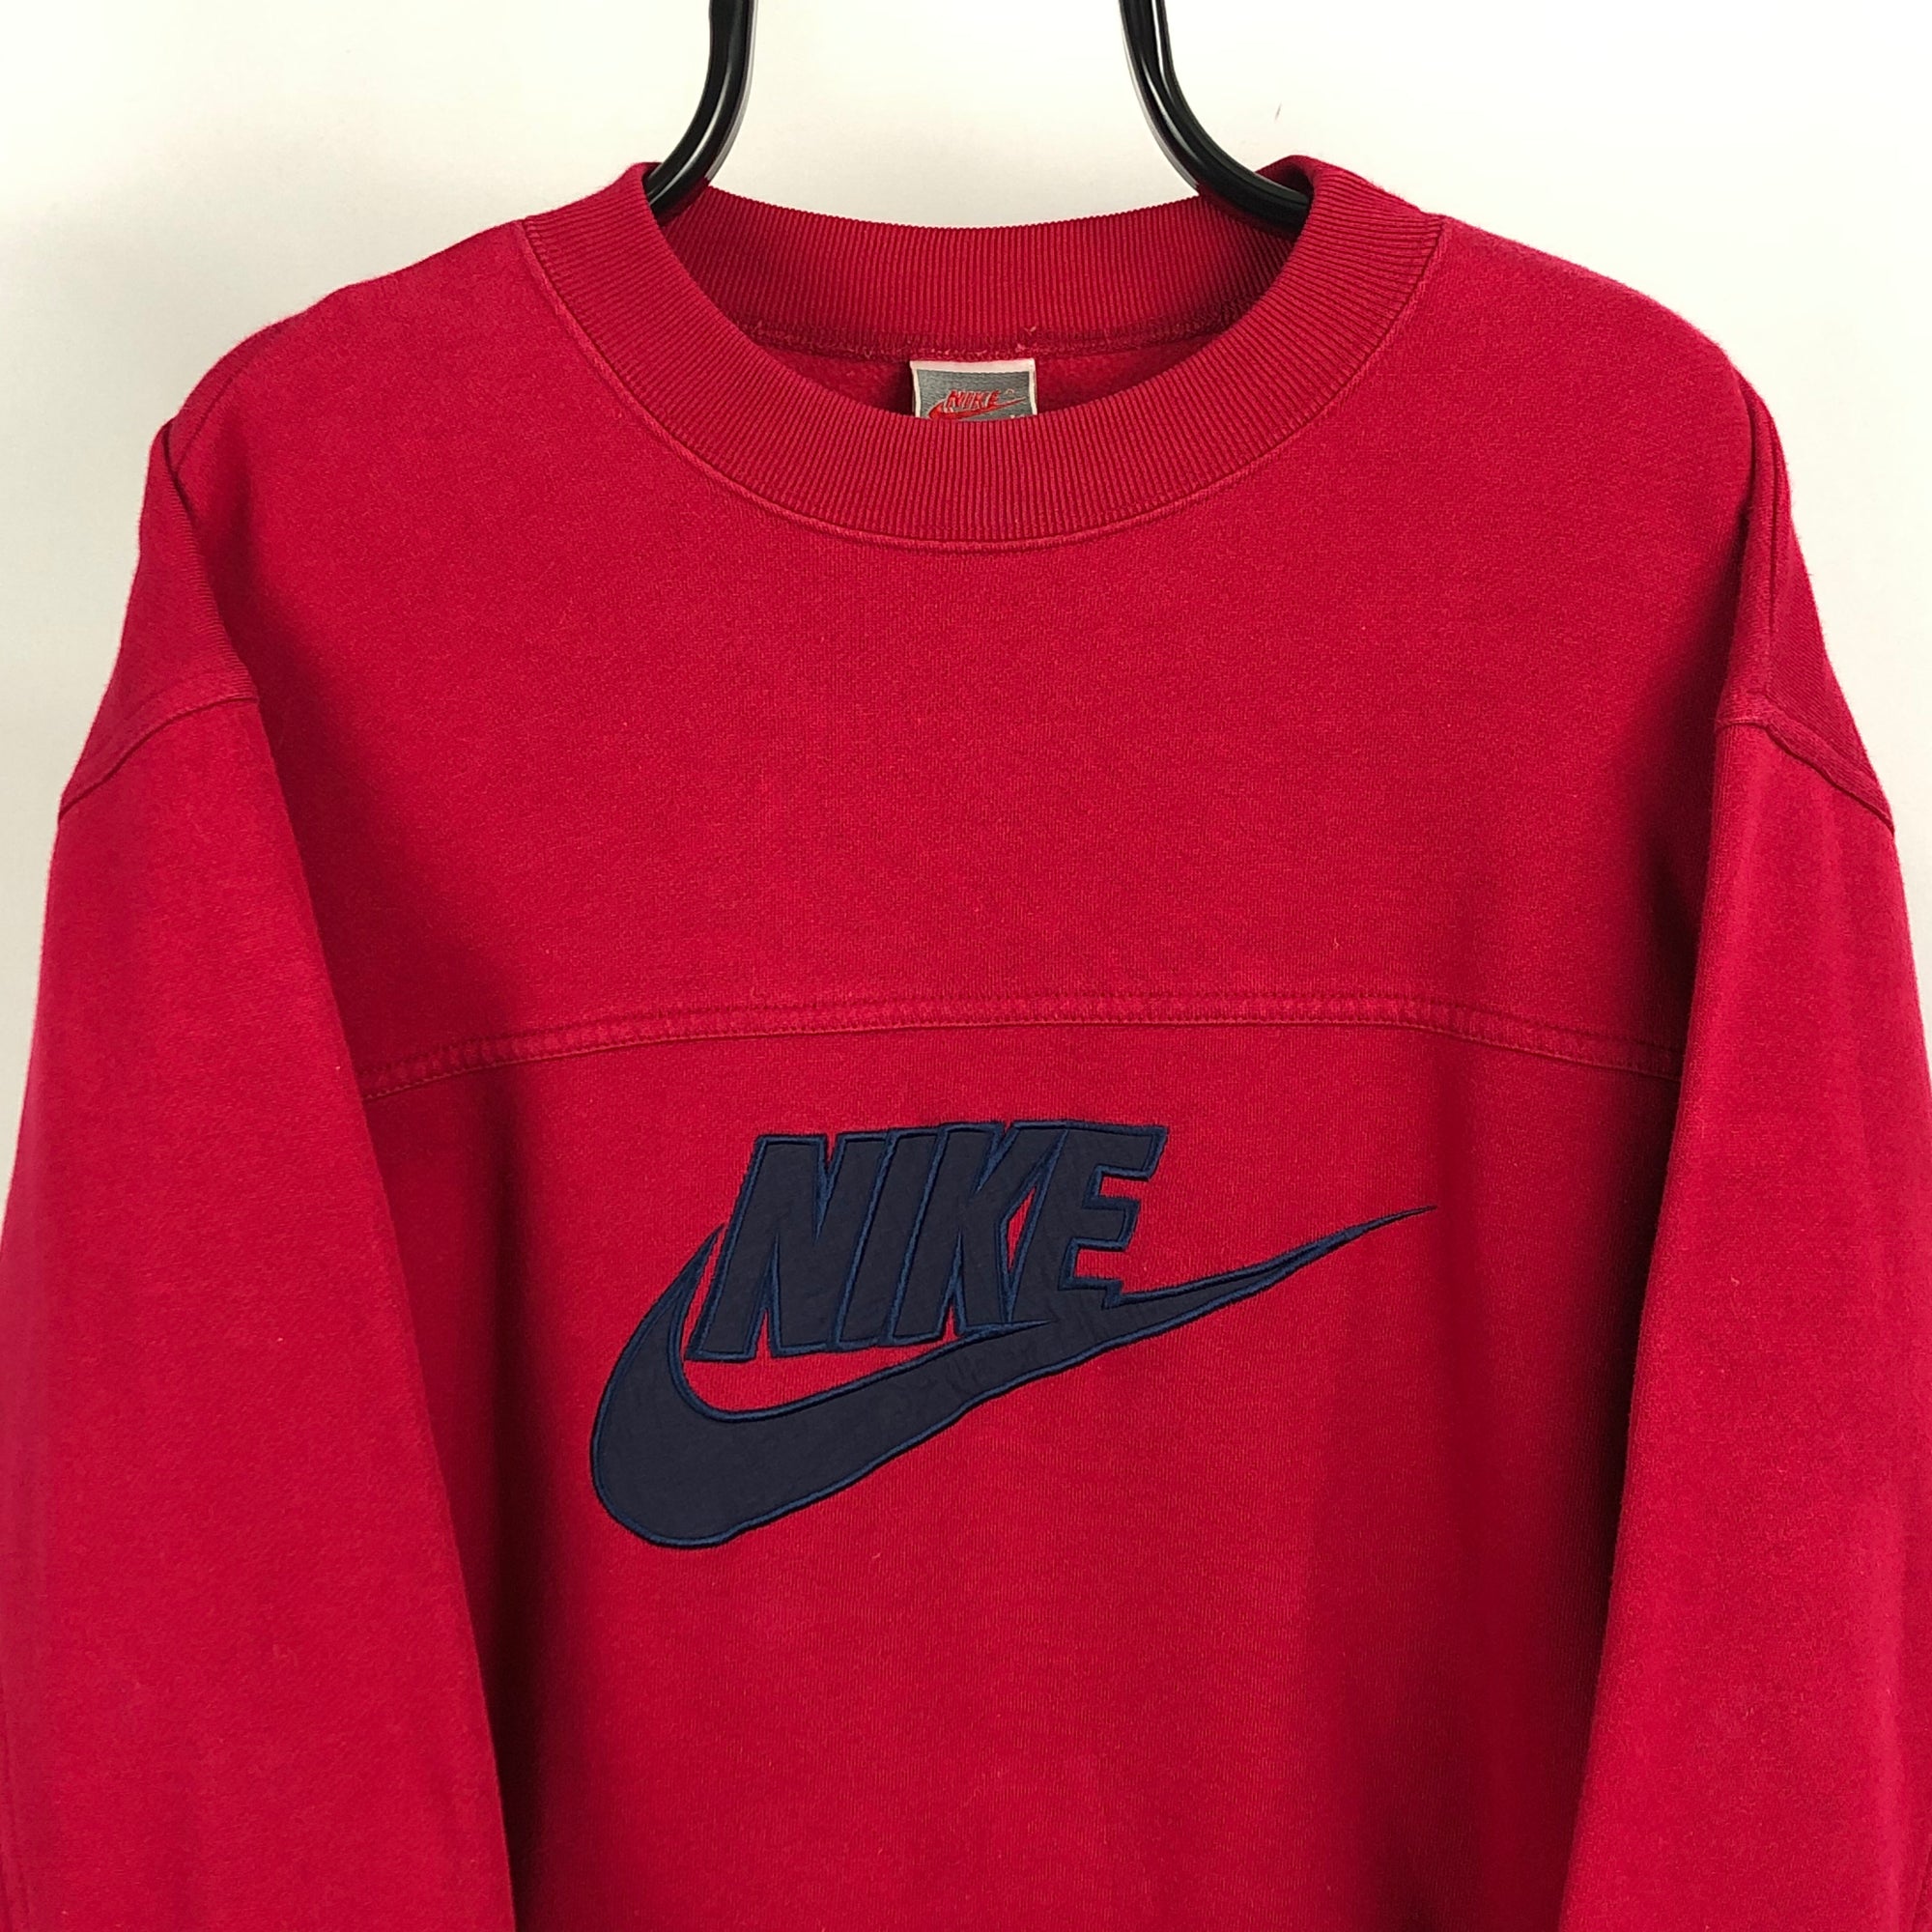 Vintage 90s Nike Spellout Sweatshirt in Deep Pink/Red + Navy - Men's Medium/Women's Large